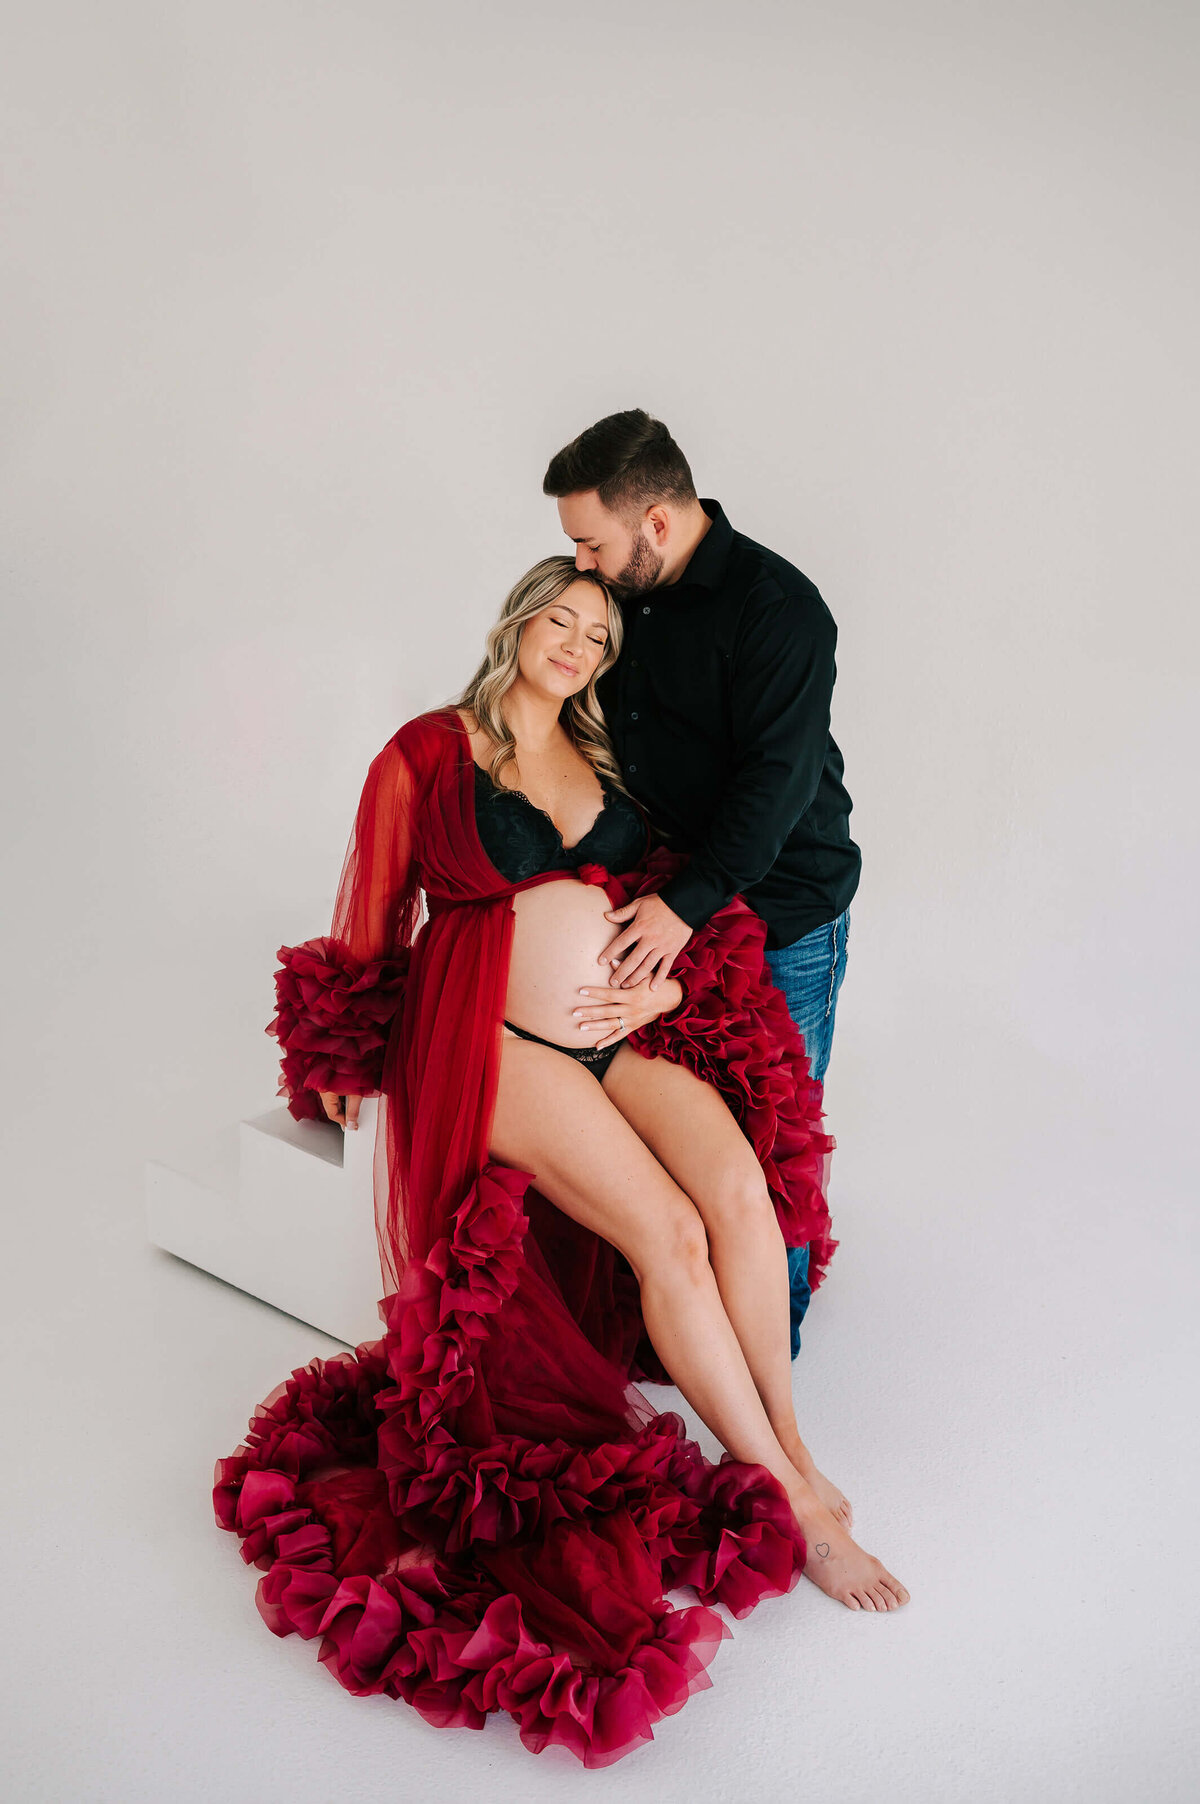 Springfield Mo maternity photographer Jessica Kennedy of The XO Photography caprureshusband kissing pregnant wife's forehead